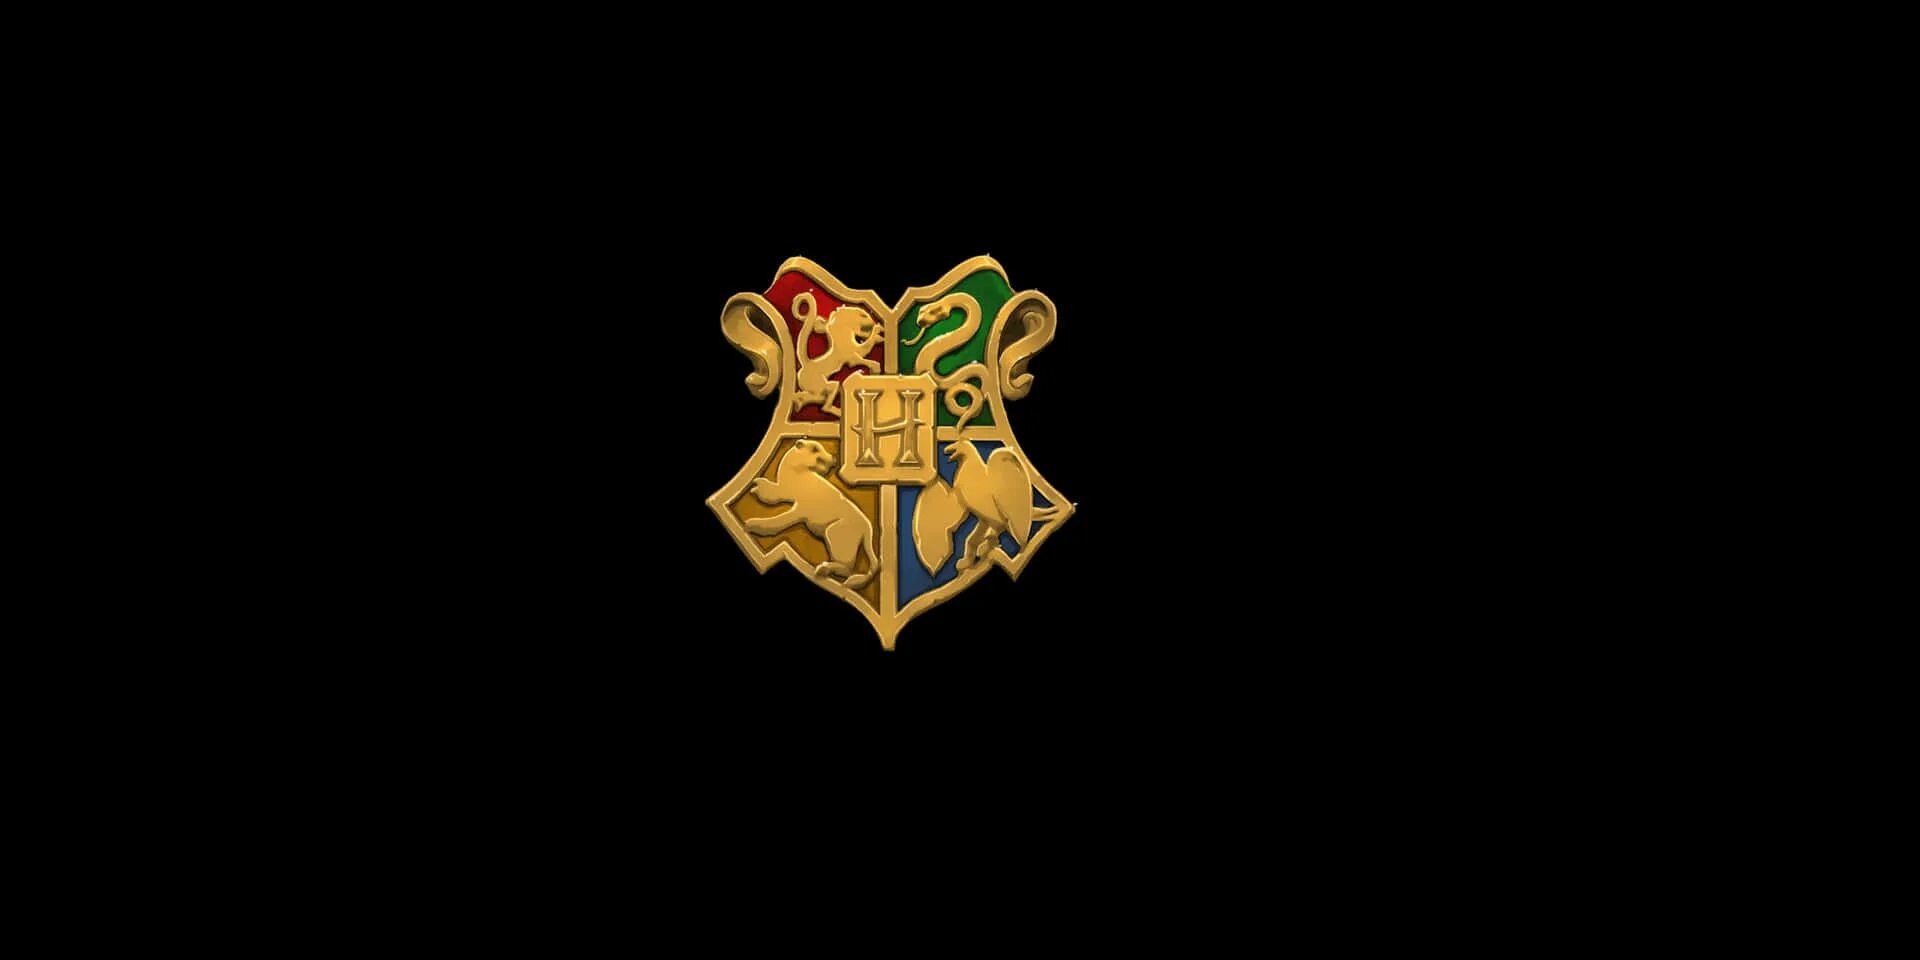 Черный экран hogwarts. Хогвартс Легаси Гриффиндор. Эмблема Хогвартса на черном фоне.